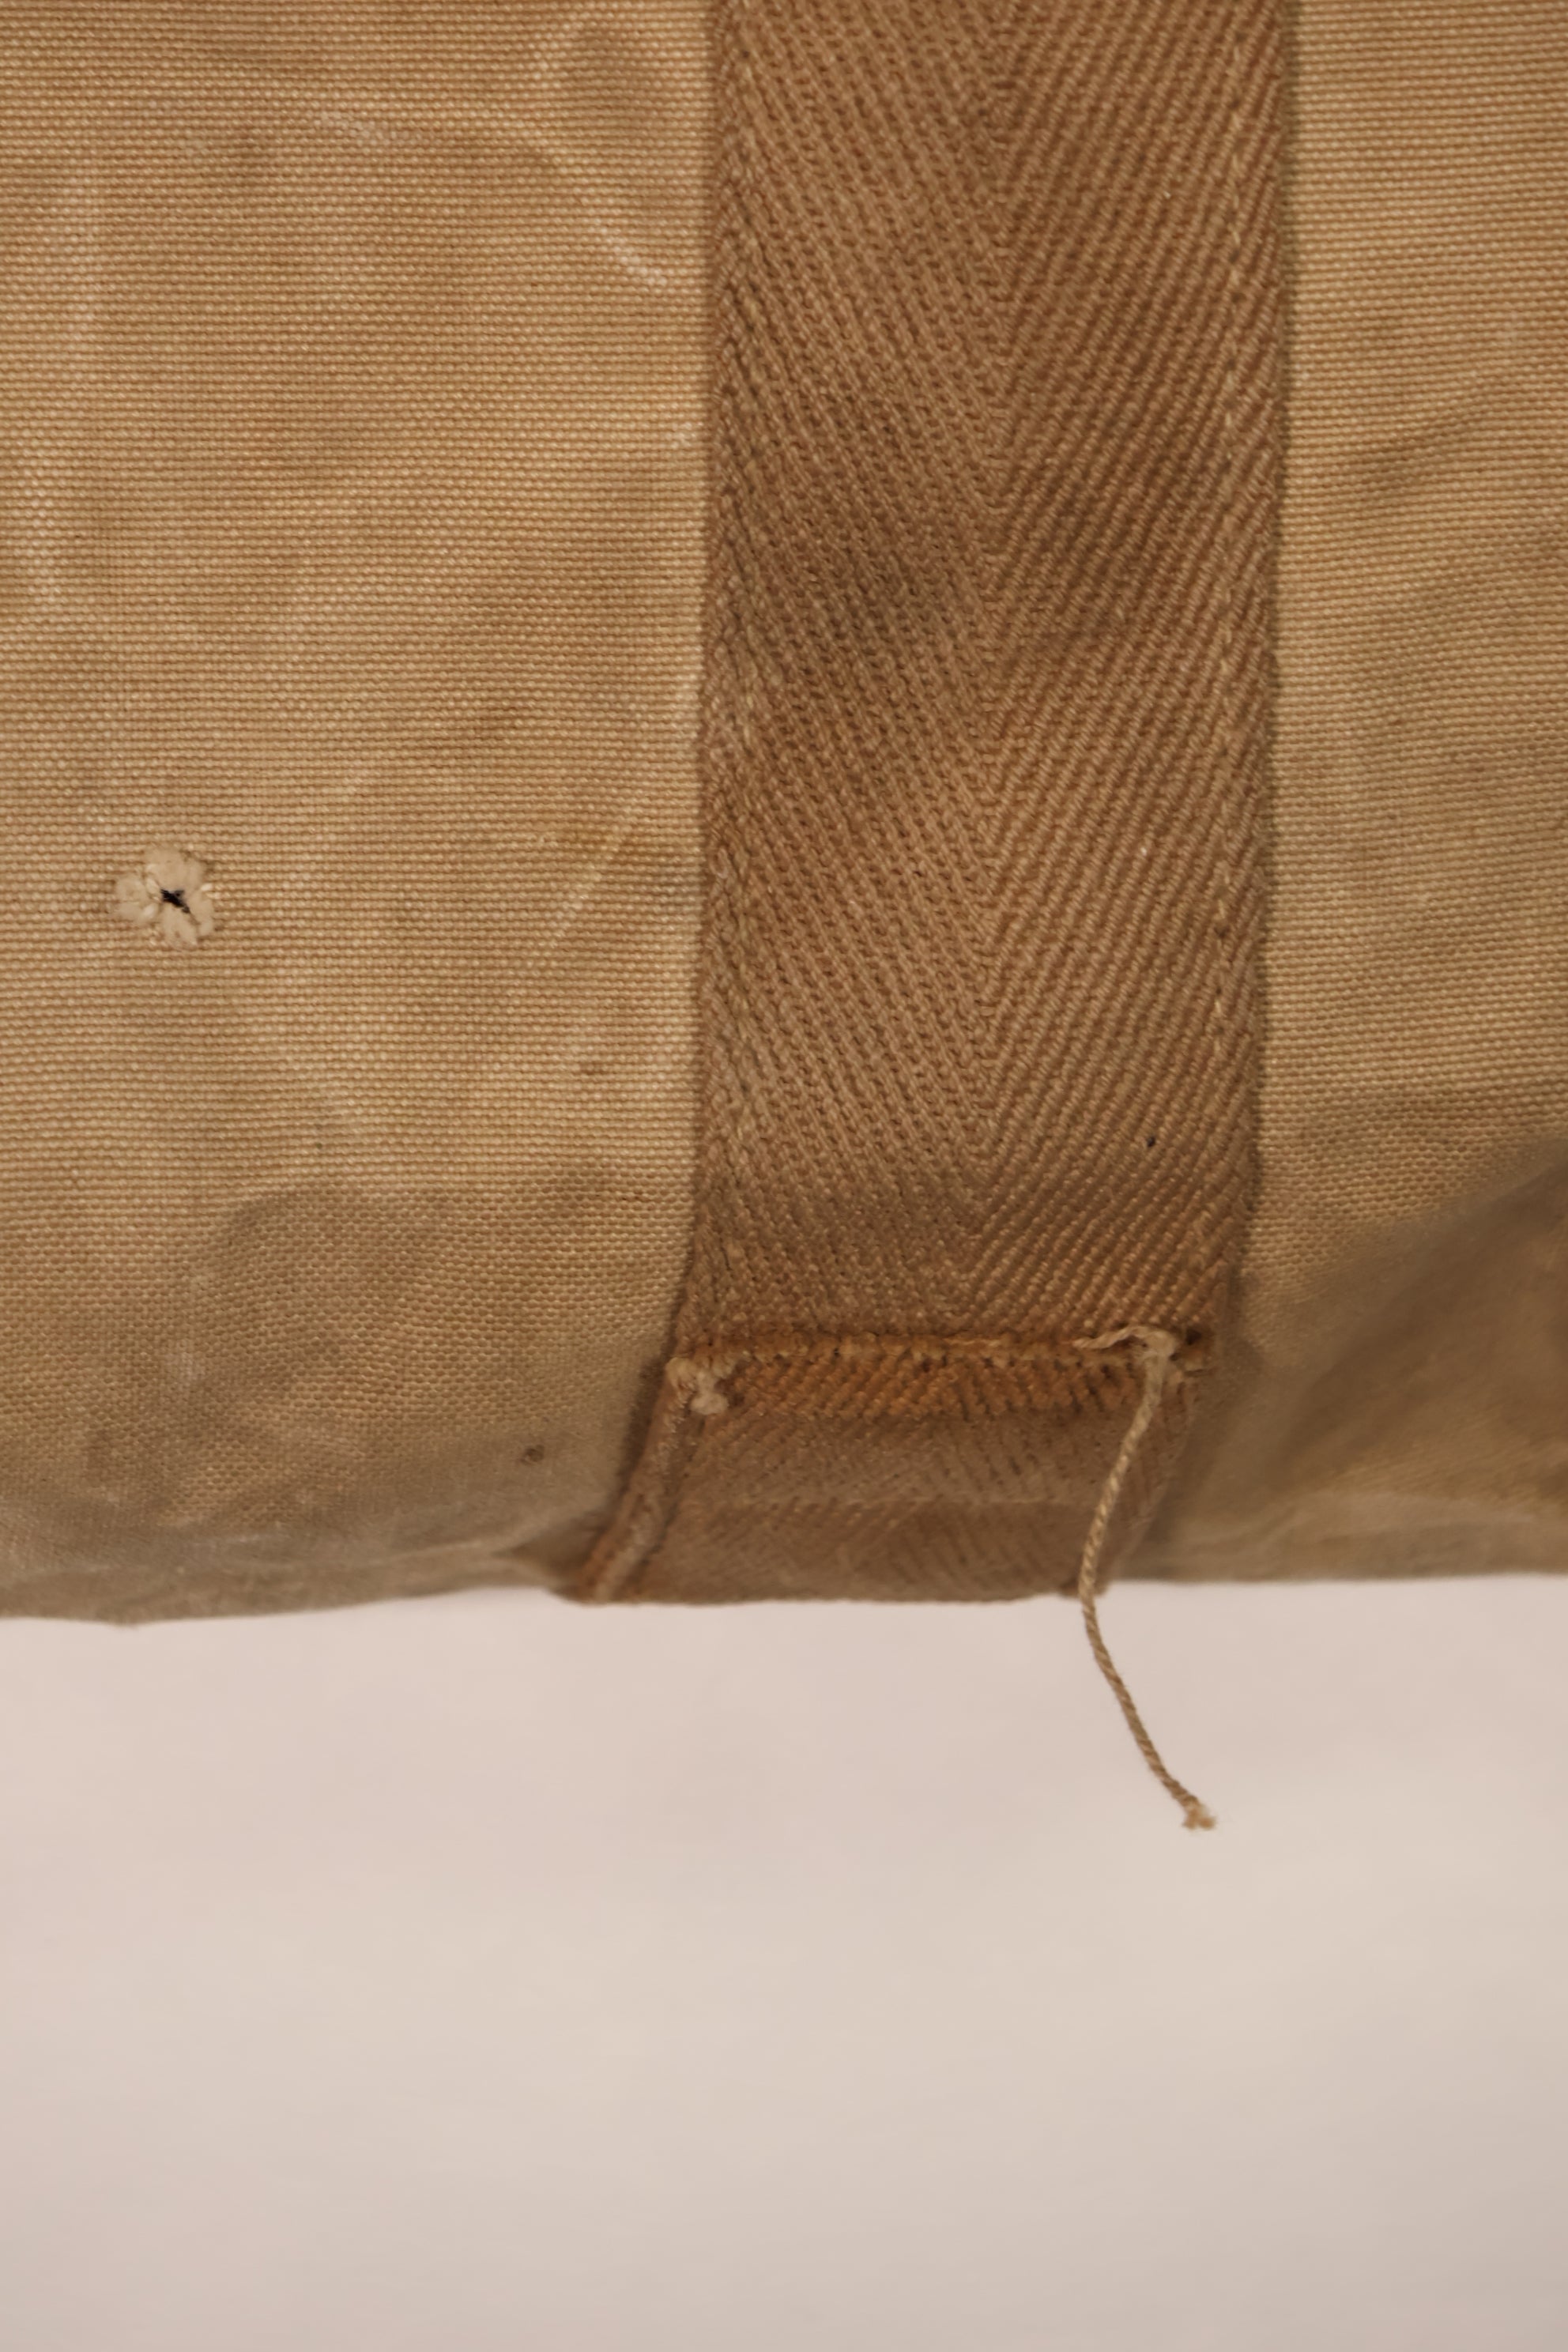 Real WWII PIONEER PARACHUTES Bag Used Kit Bag